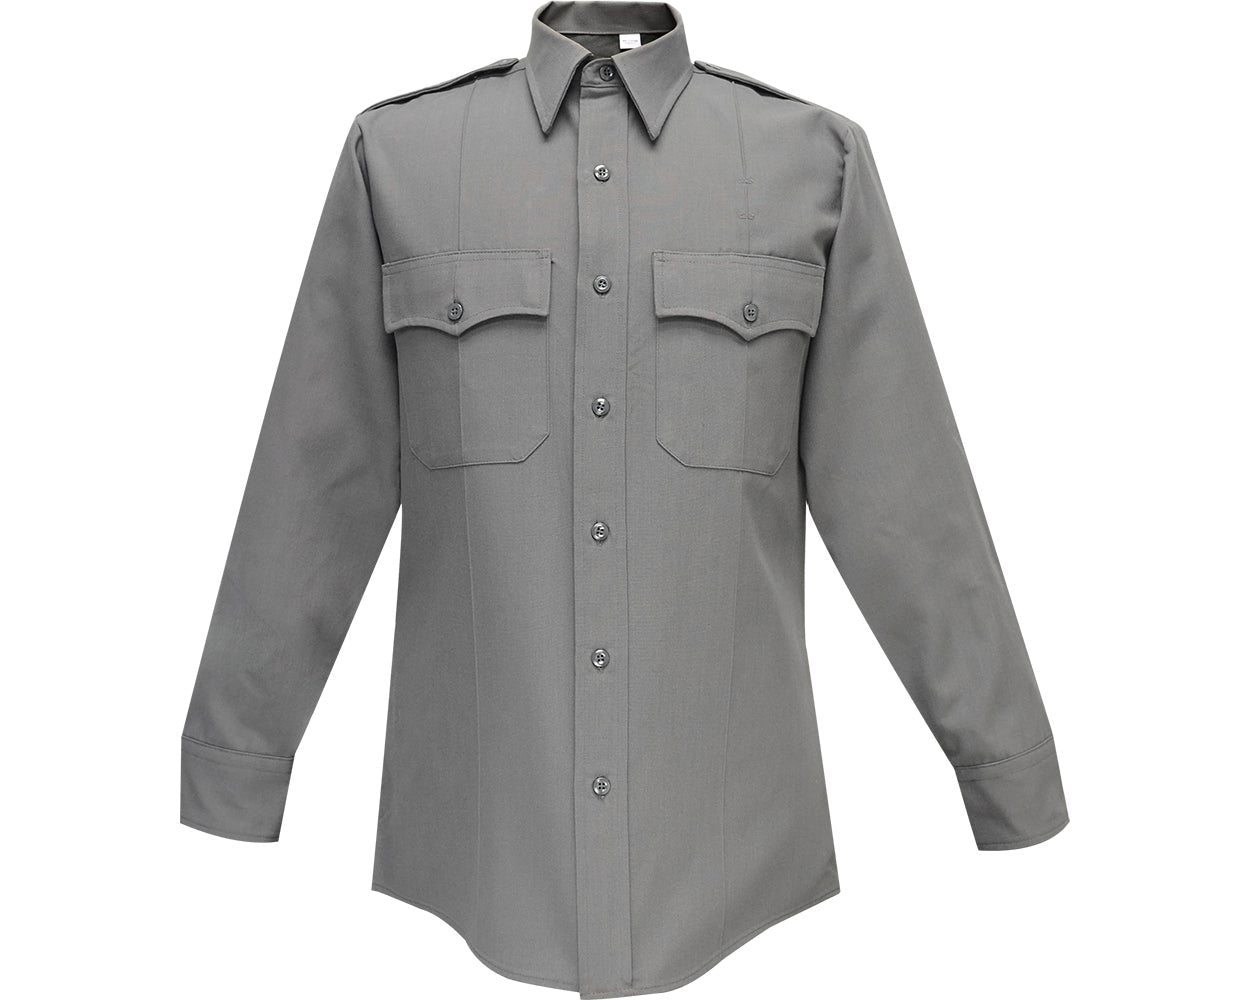 Flying Cross Deluxe Tropical 65% Poly/35% Rayon Men's Long Sleeve Uniform Shirt 46W66 - Slate Gray, 14-14.5 x 32-33